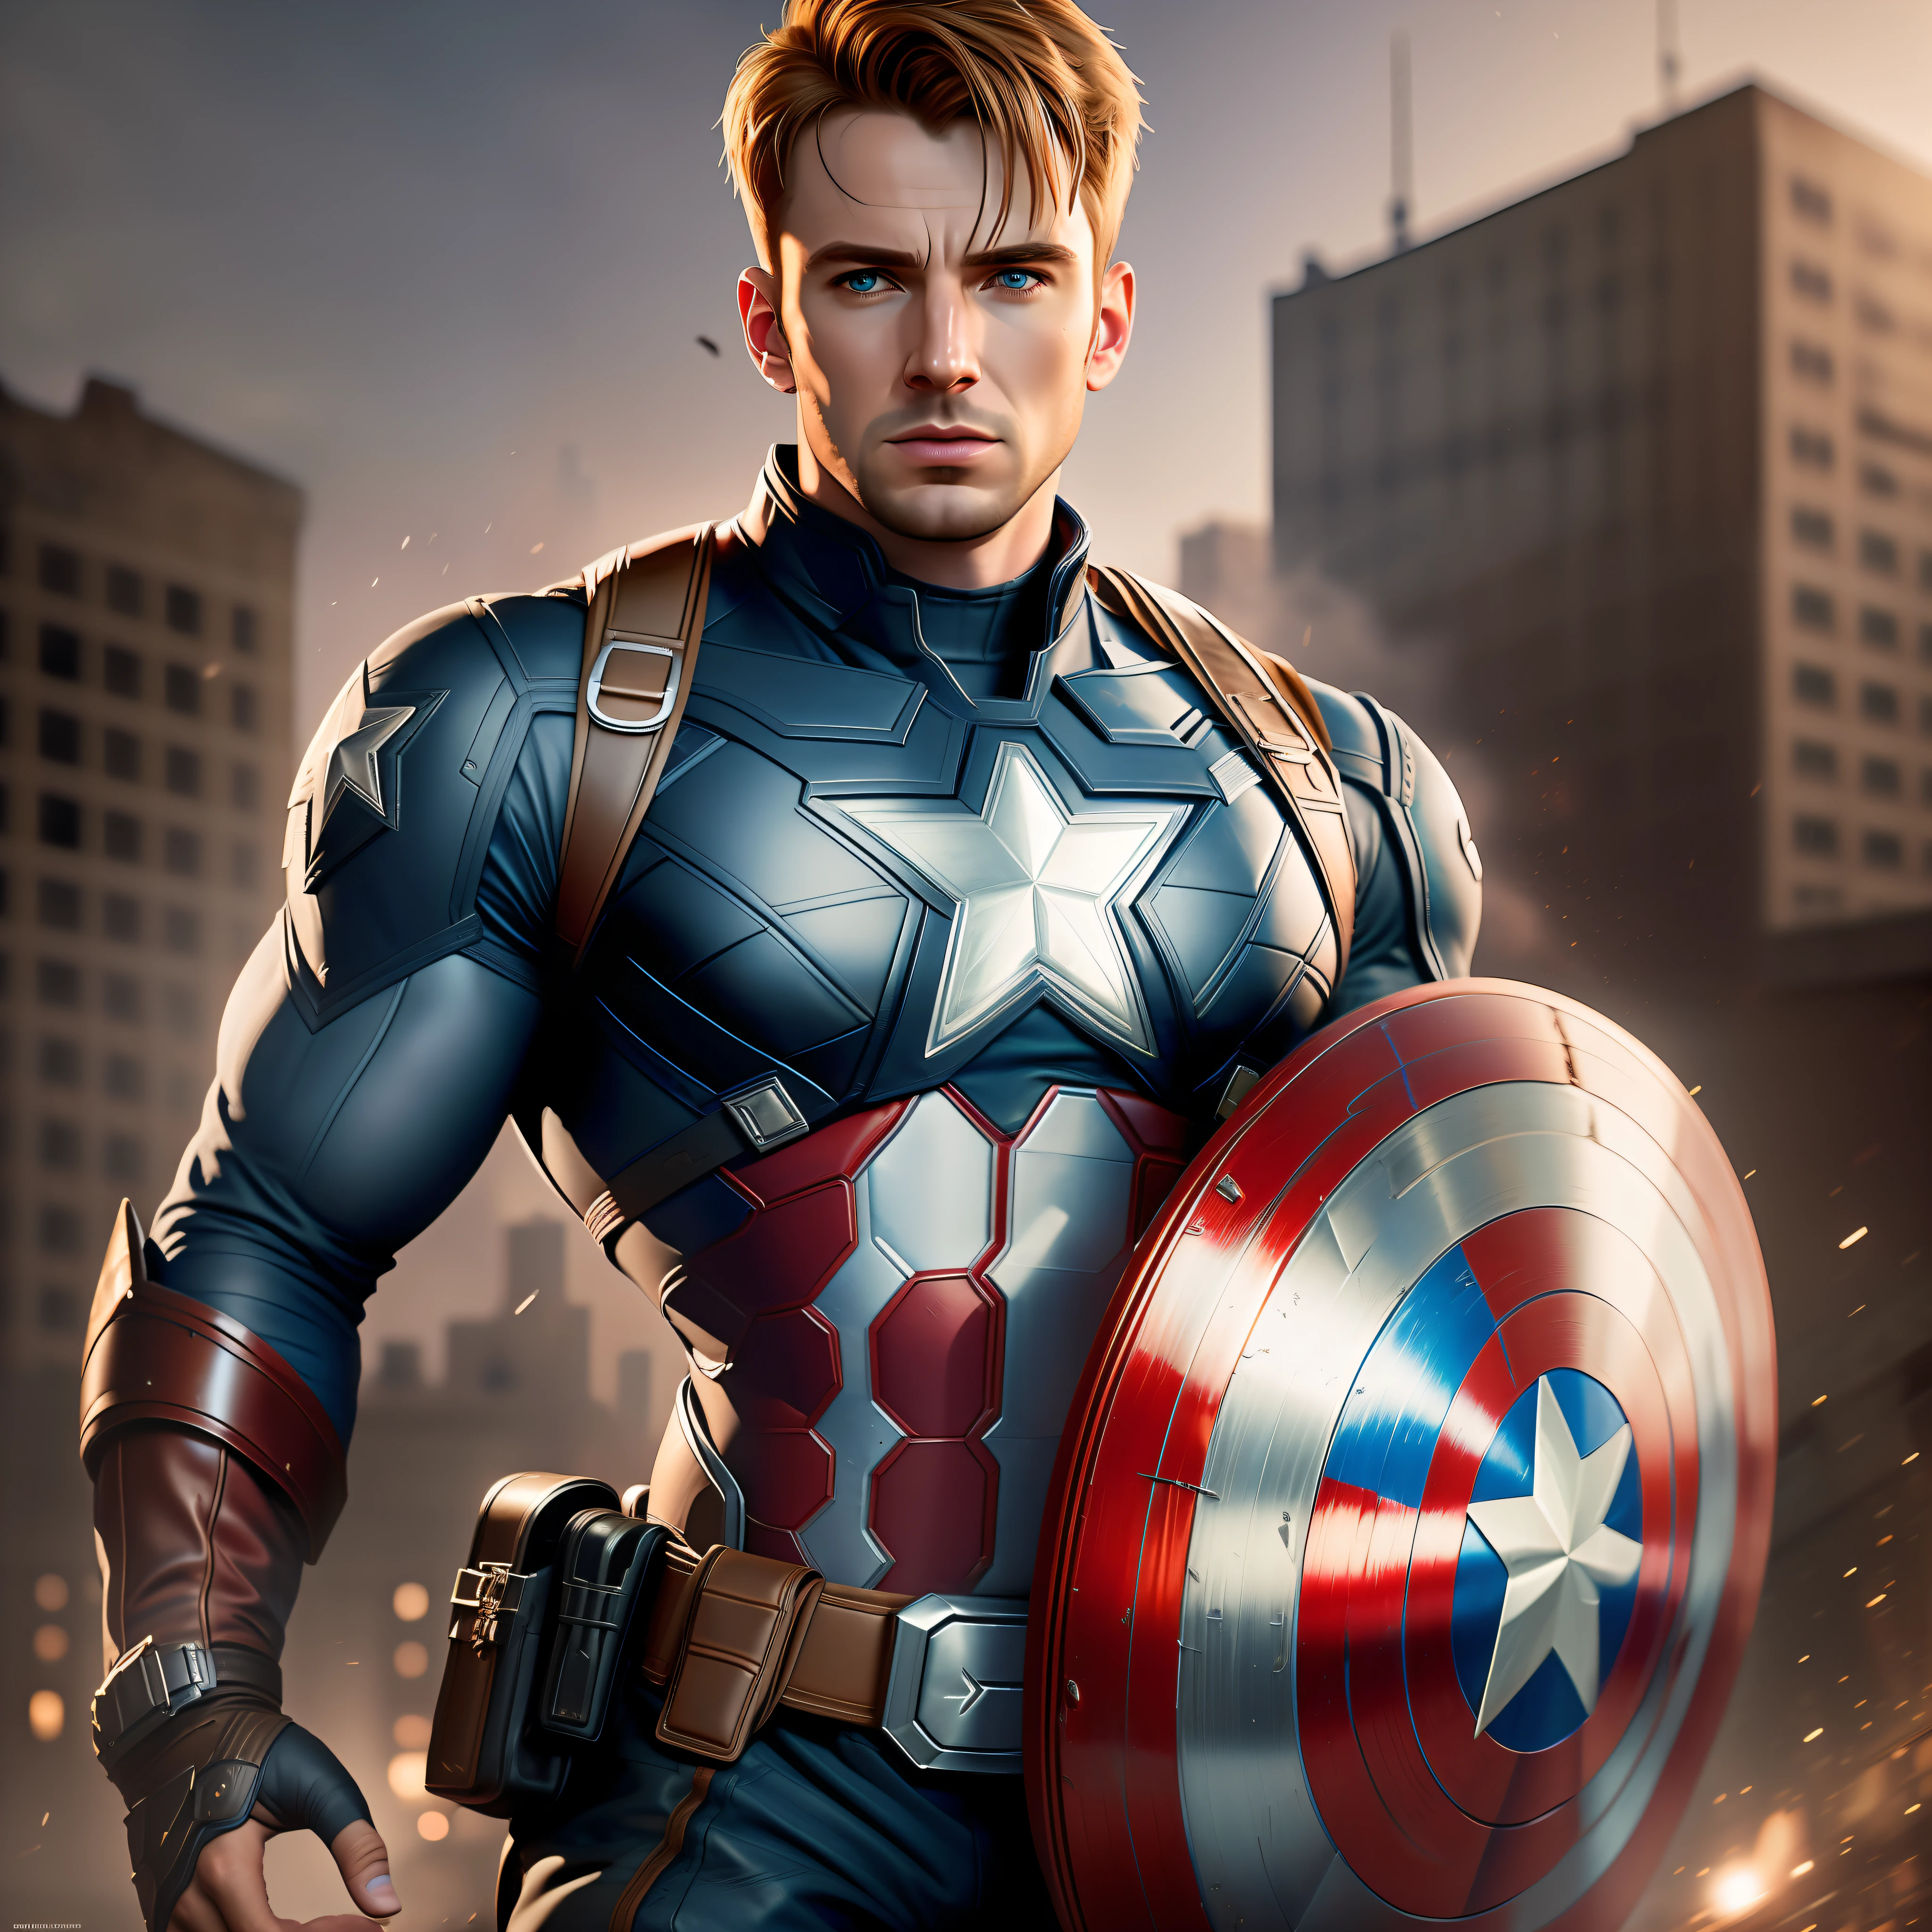 How is what Cap did to Peter in Captain America: Civil War okay? - Quora